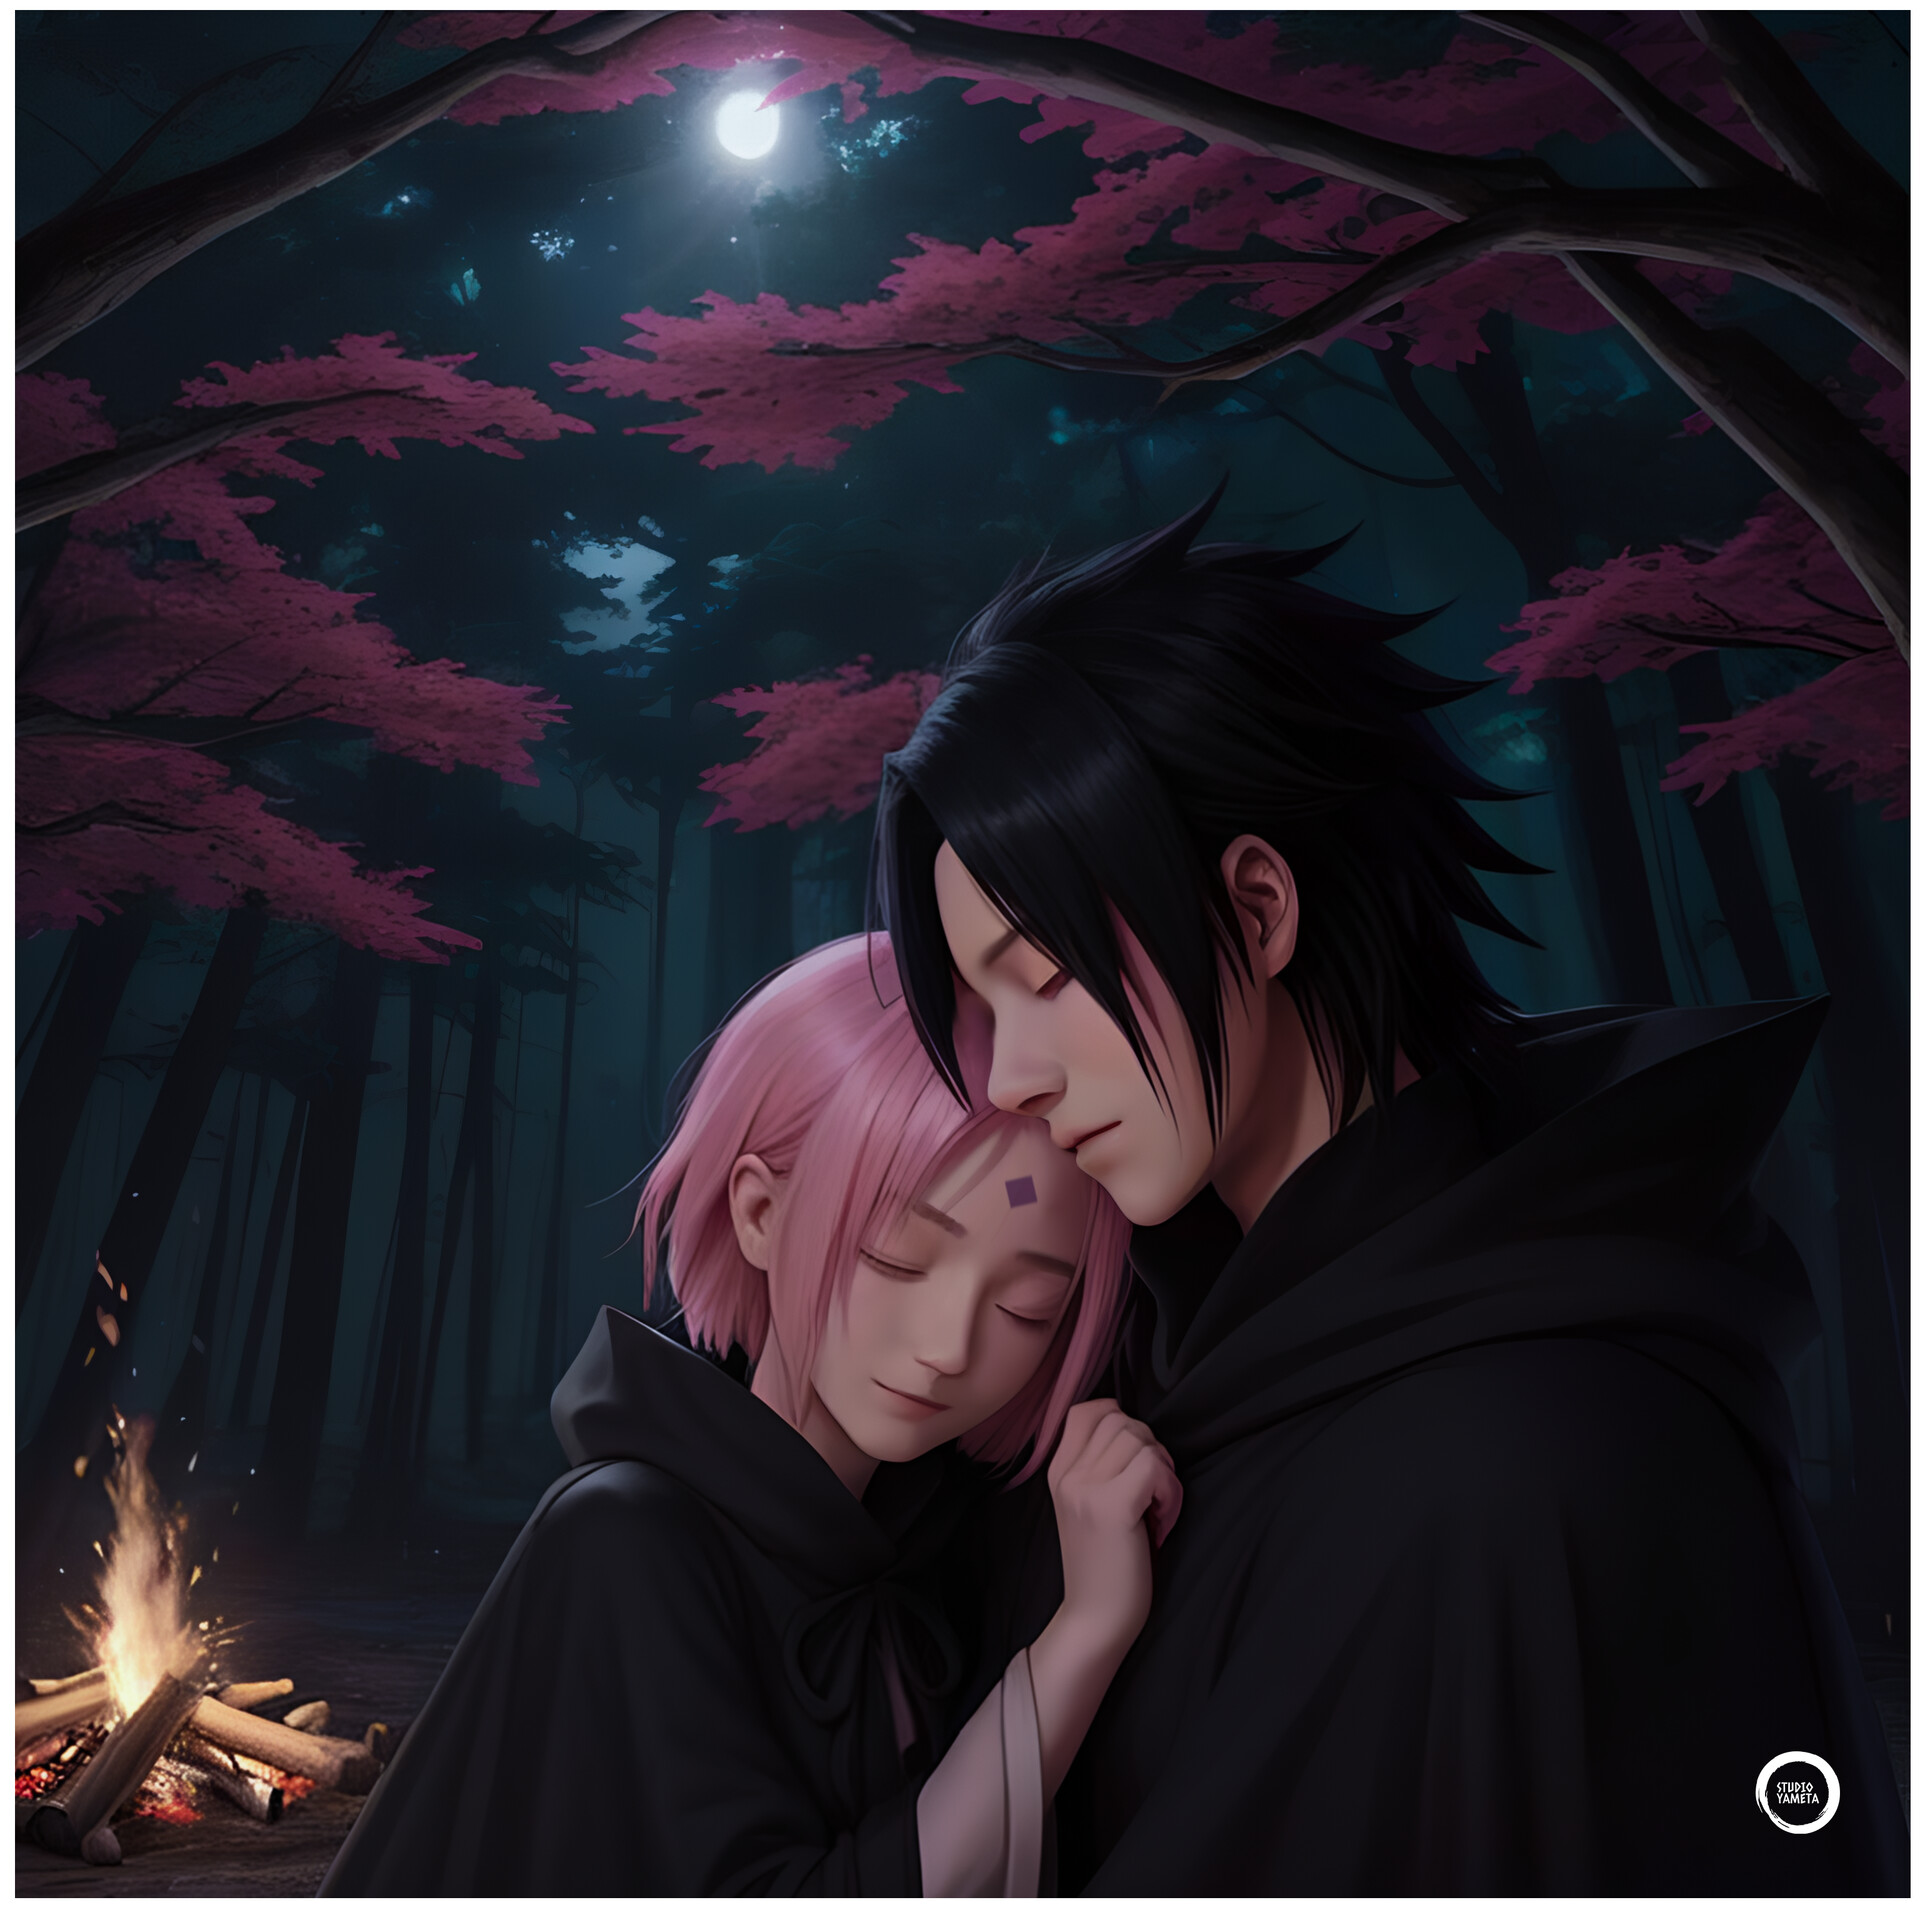 ArtStation - Sasuke and Sakura's Romantic Moment